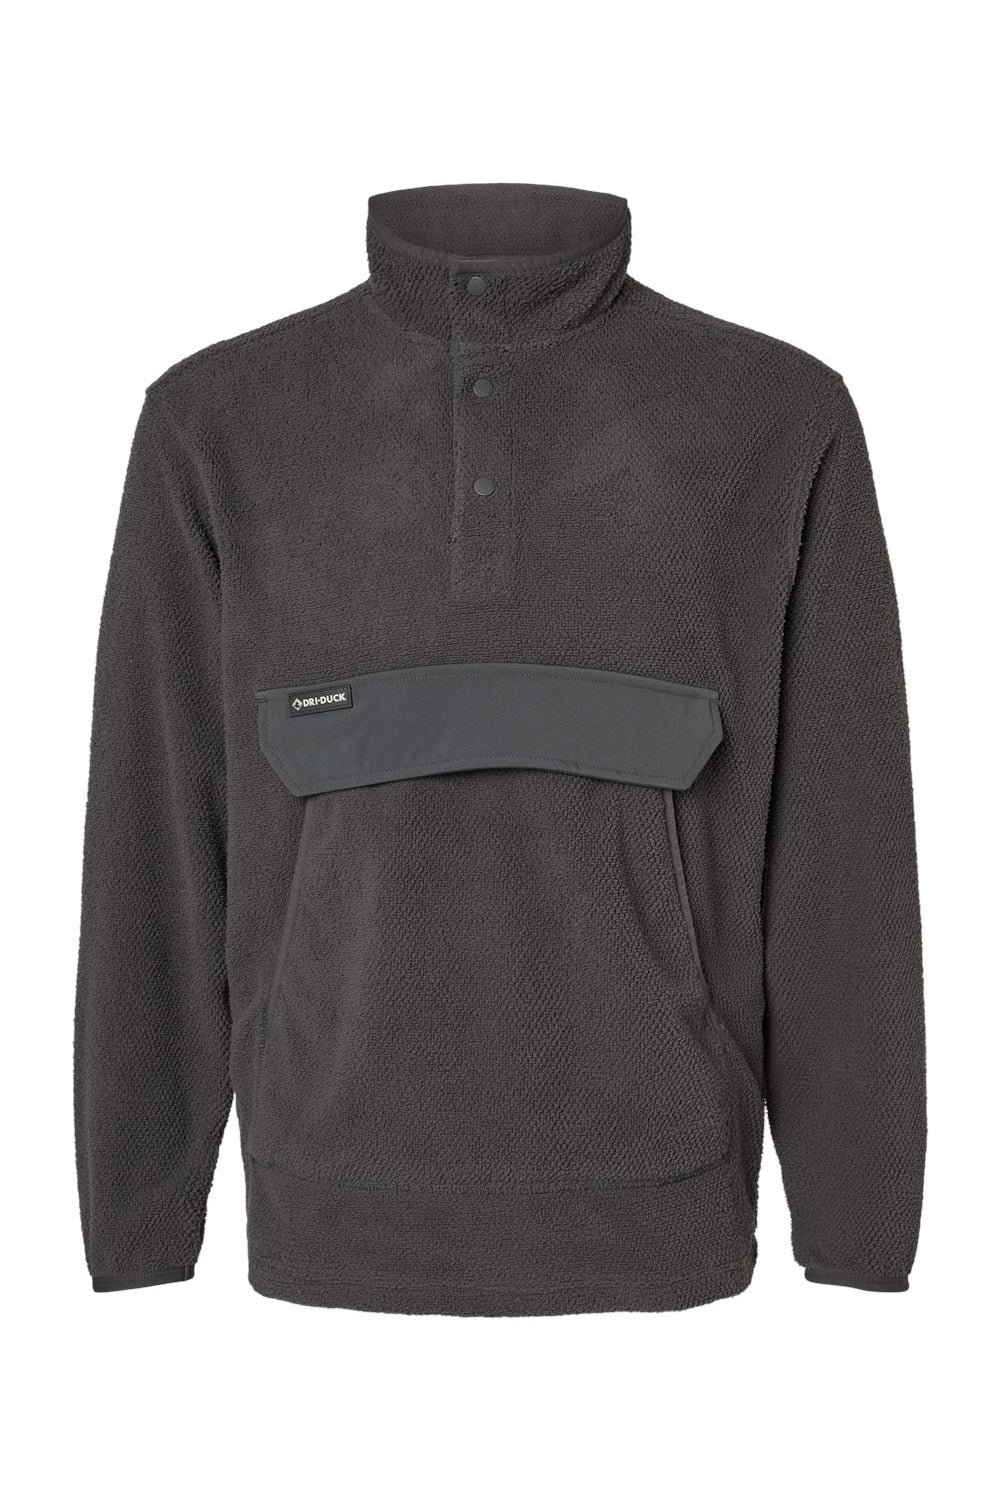 Dri Duck 7356 Mens Timber Mountain Fleece Sweatshirt Charcoal Grey Flat Front